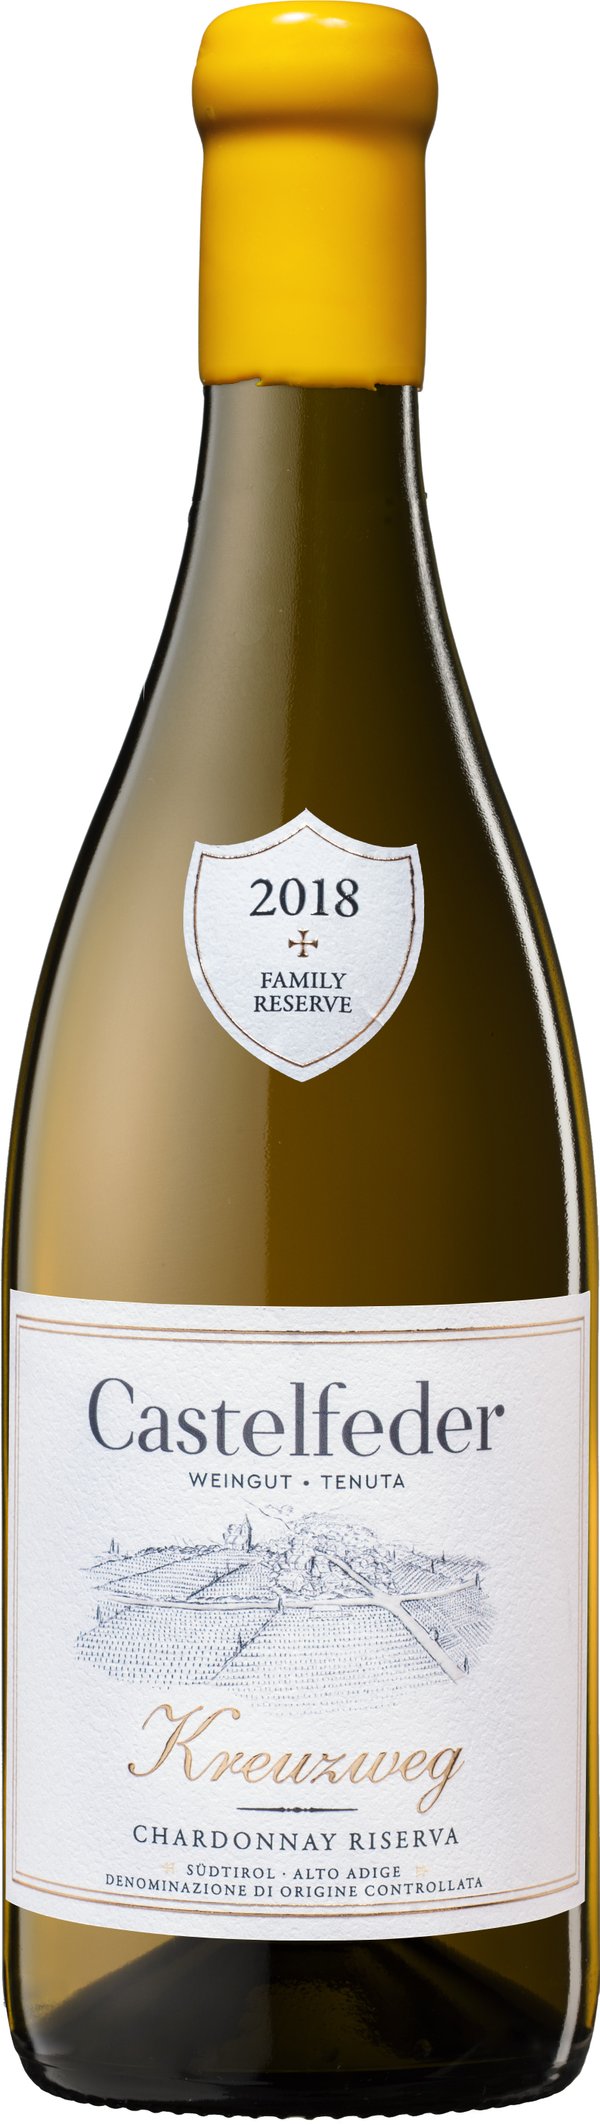 Chardonnay Riserva "KREUZWEG" Family Reserve 2019 Castelfeder